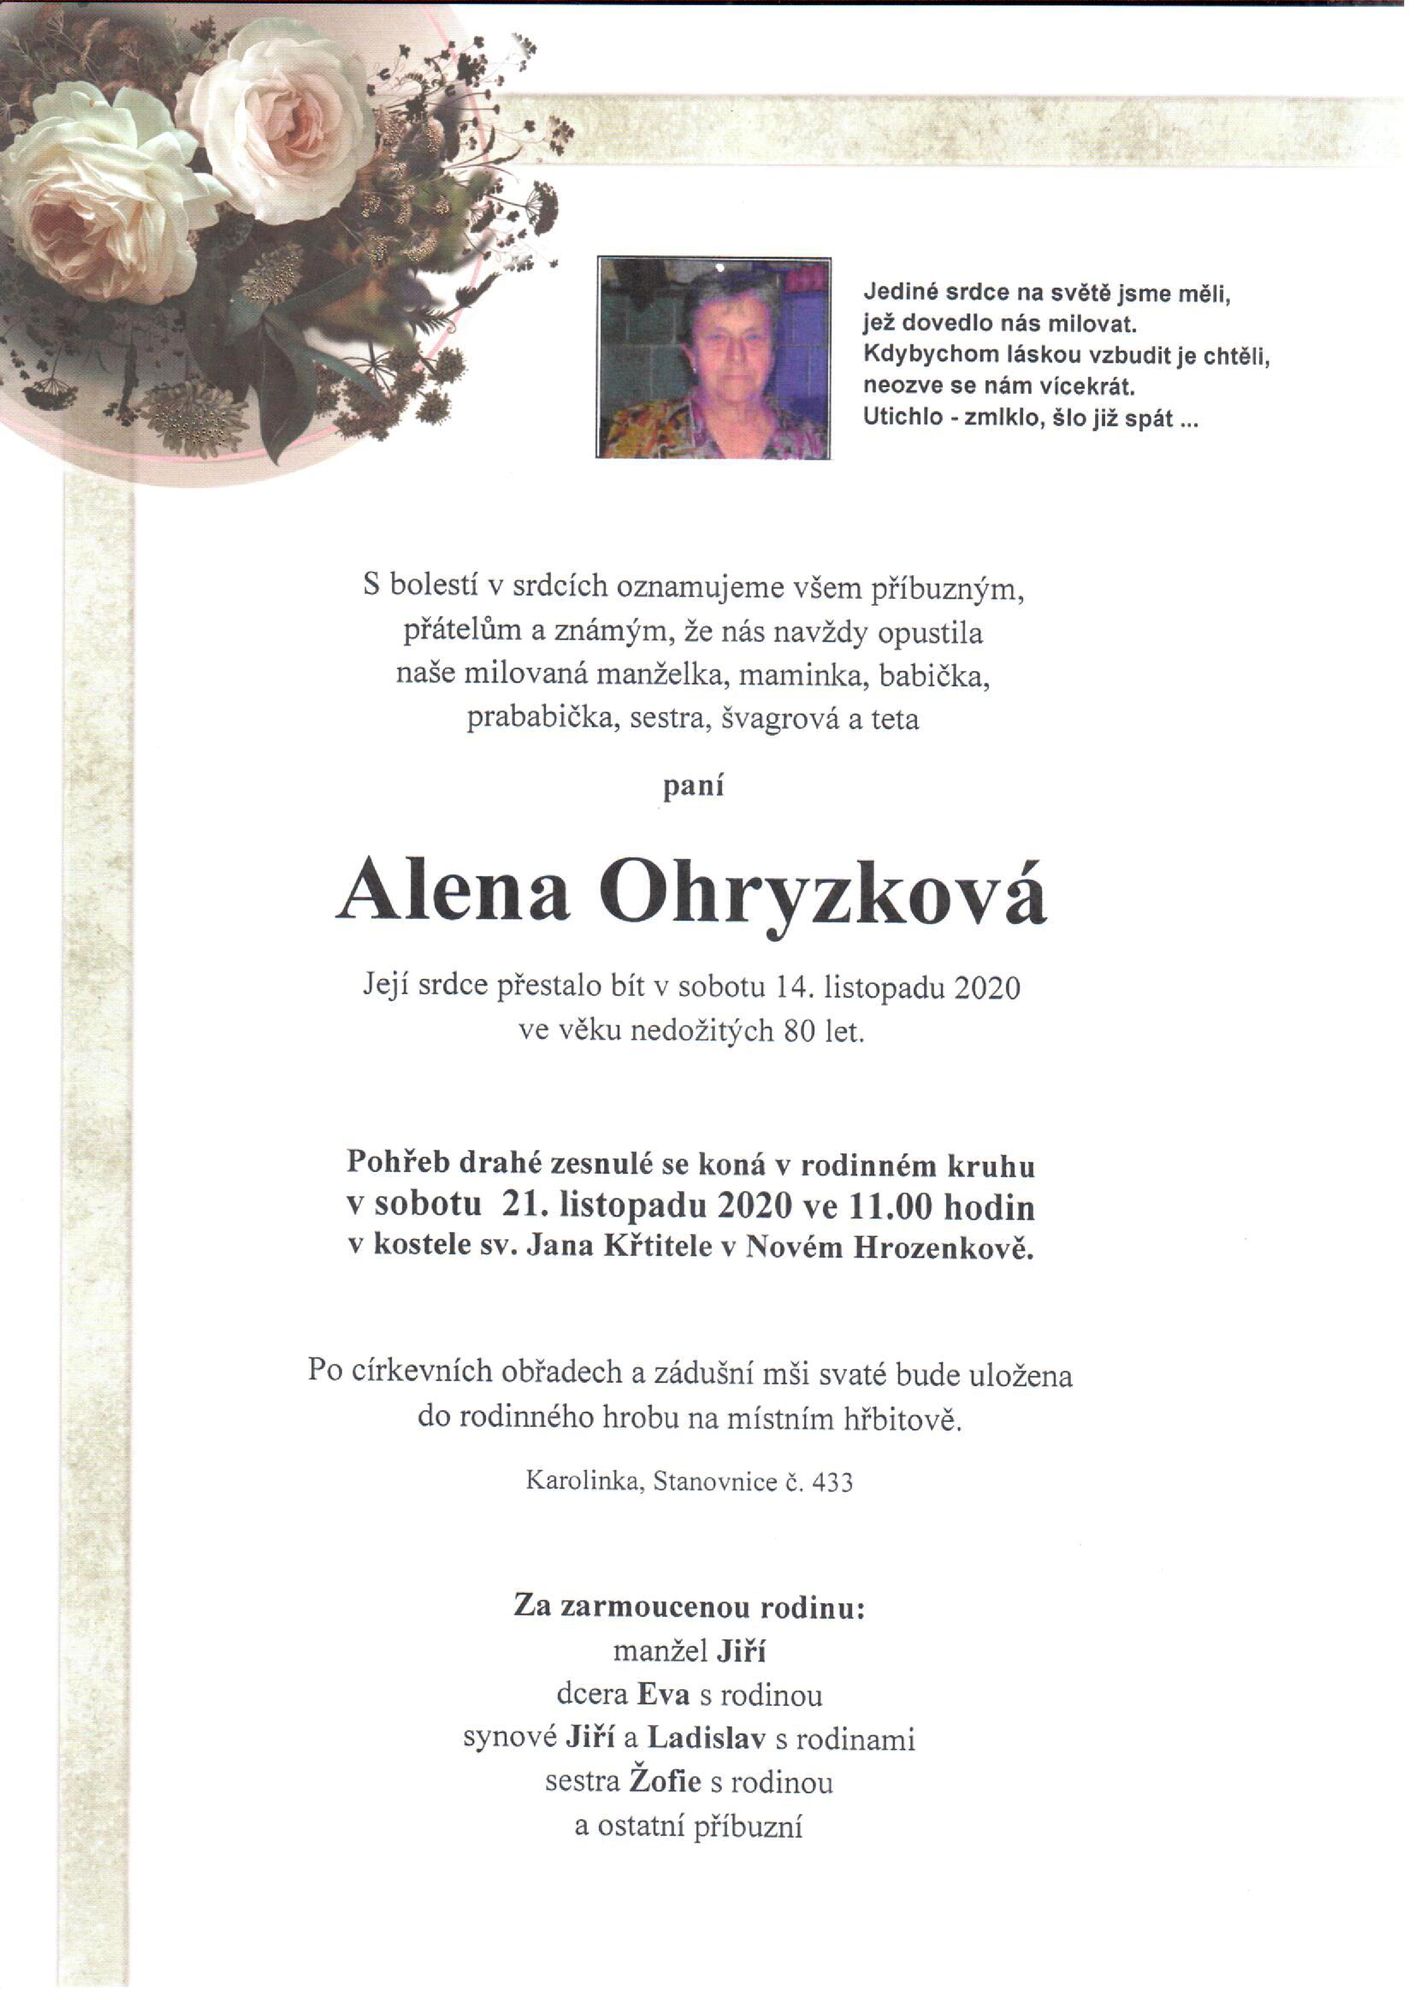 Alena Ohryzková